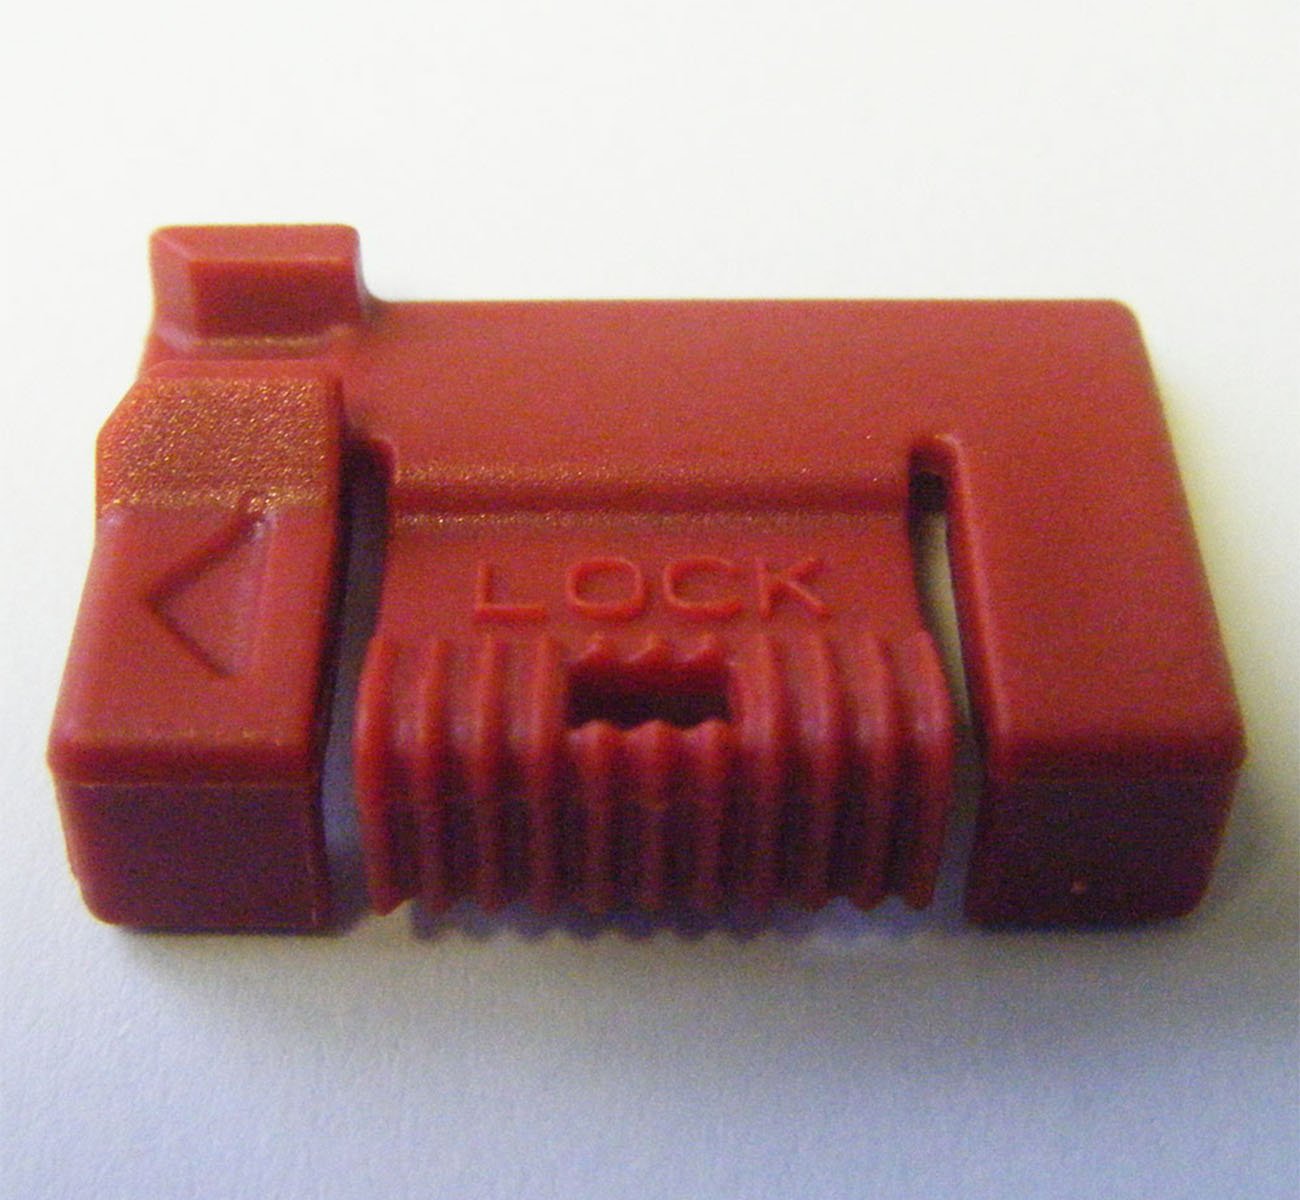 Replacement Lock: Lockable Cat Flaps (M304TP1)